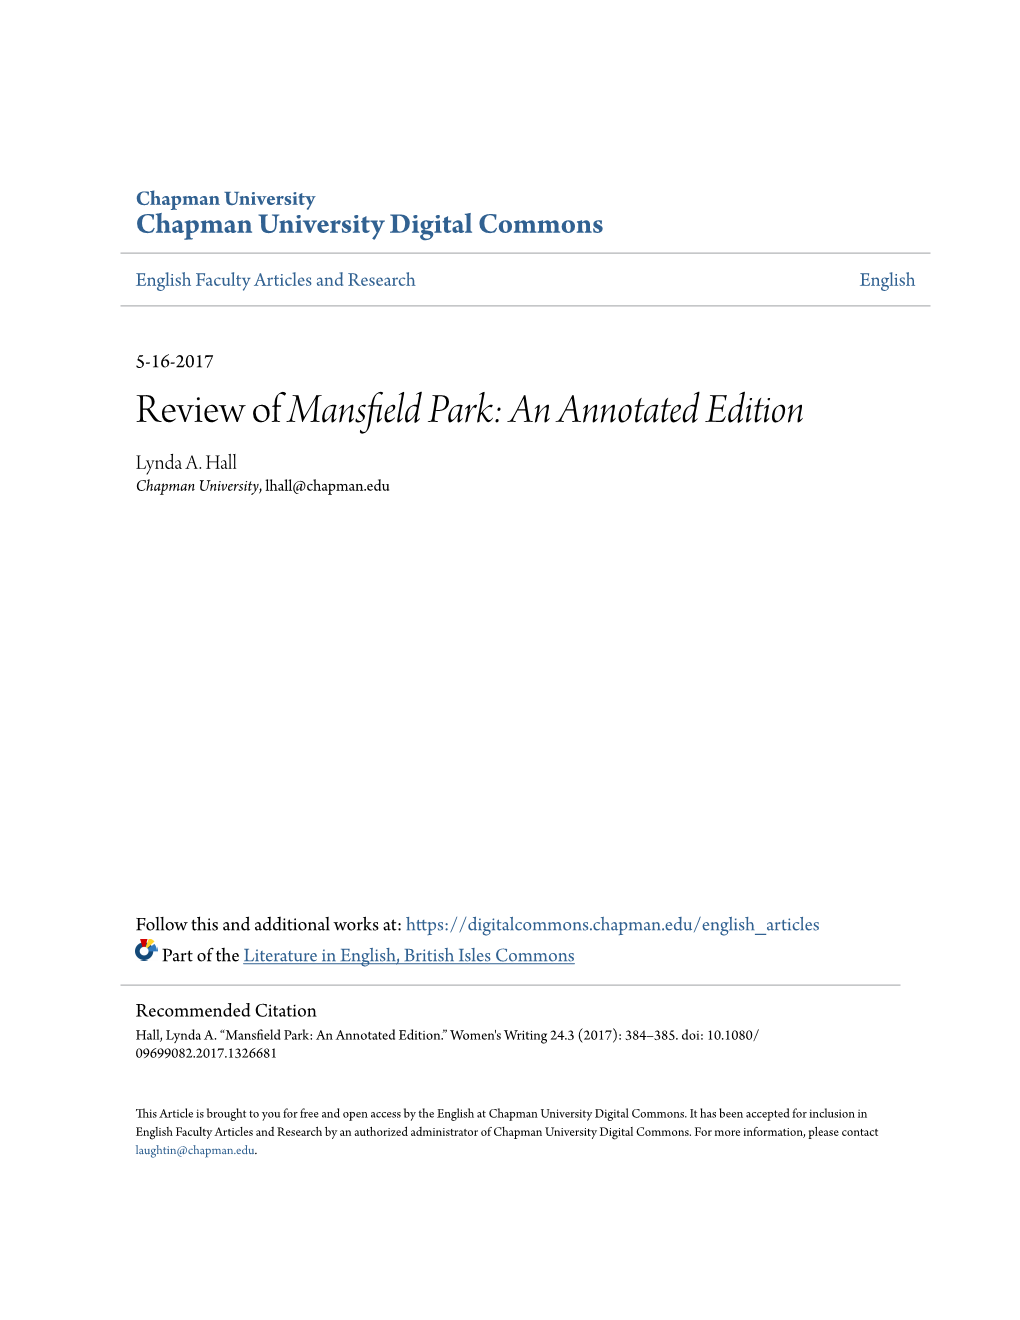 Mansfield Park: an Annotated Edition&lt;/Em&gt;